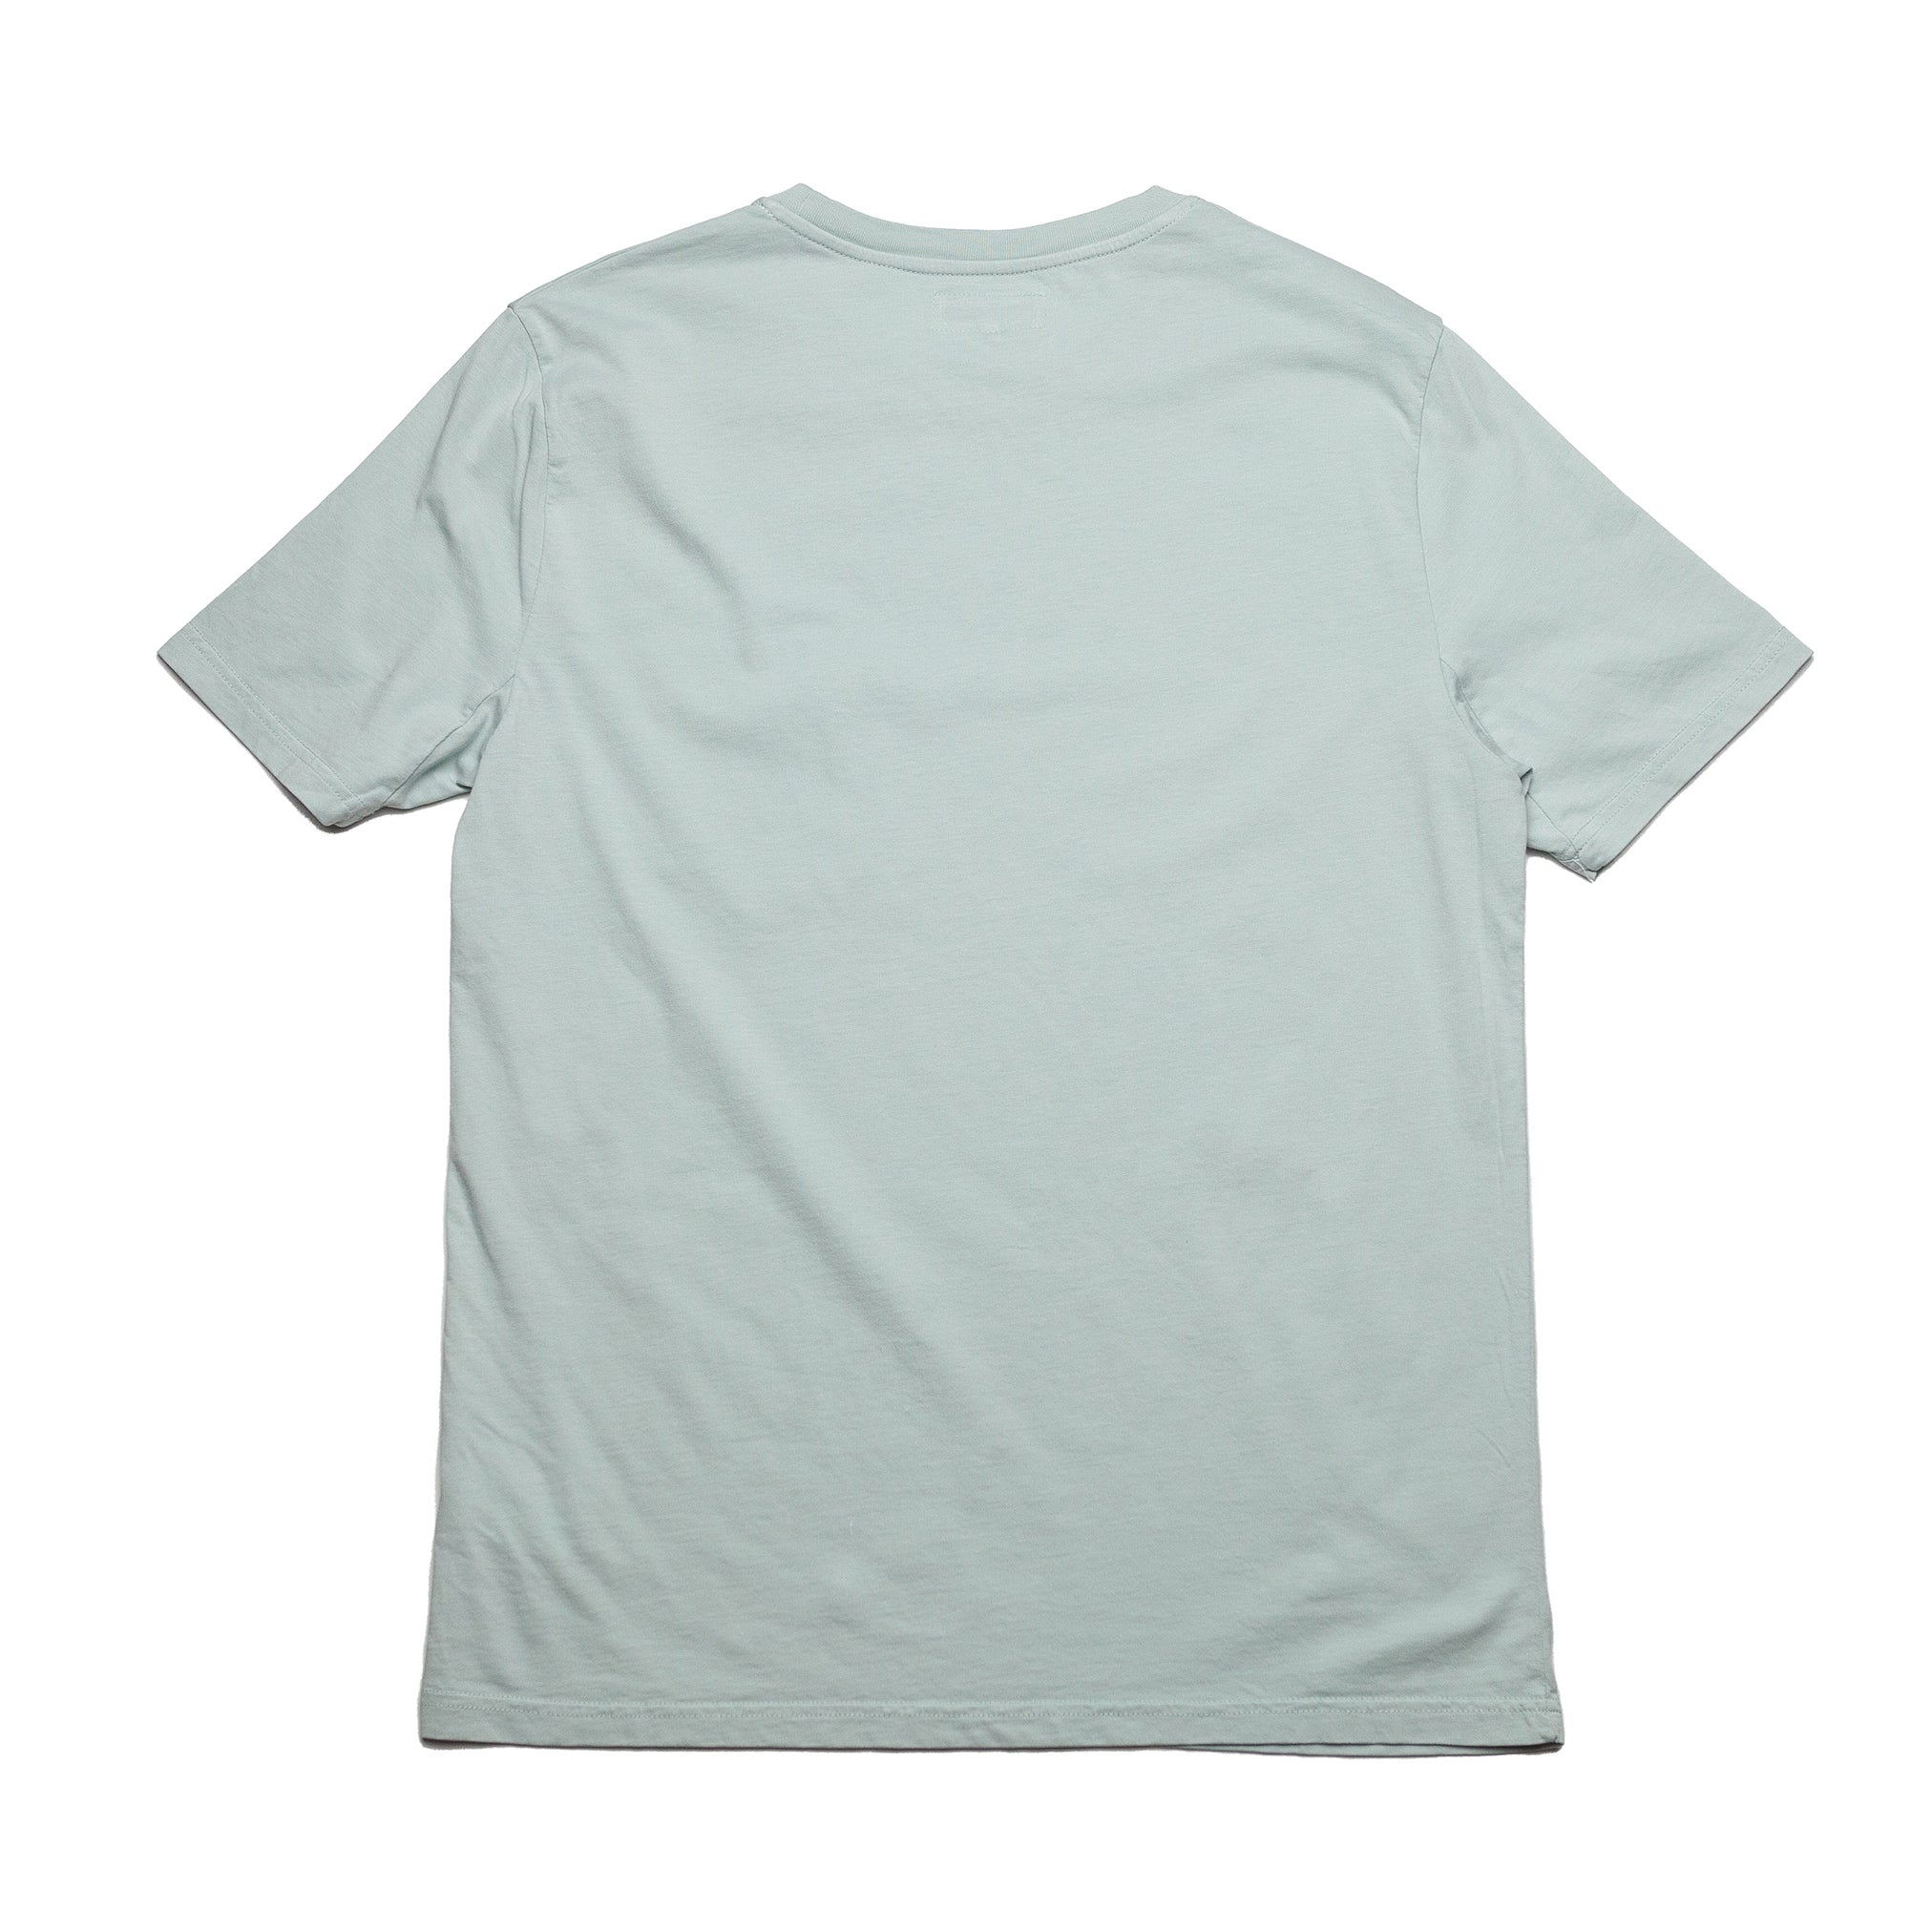 Good Basics Pocket T-Shirt in Ice